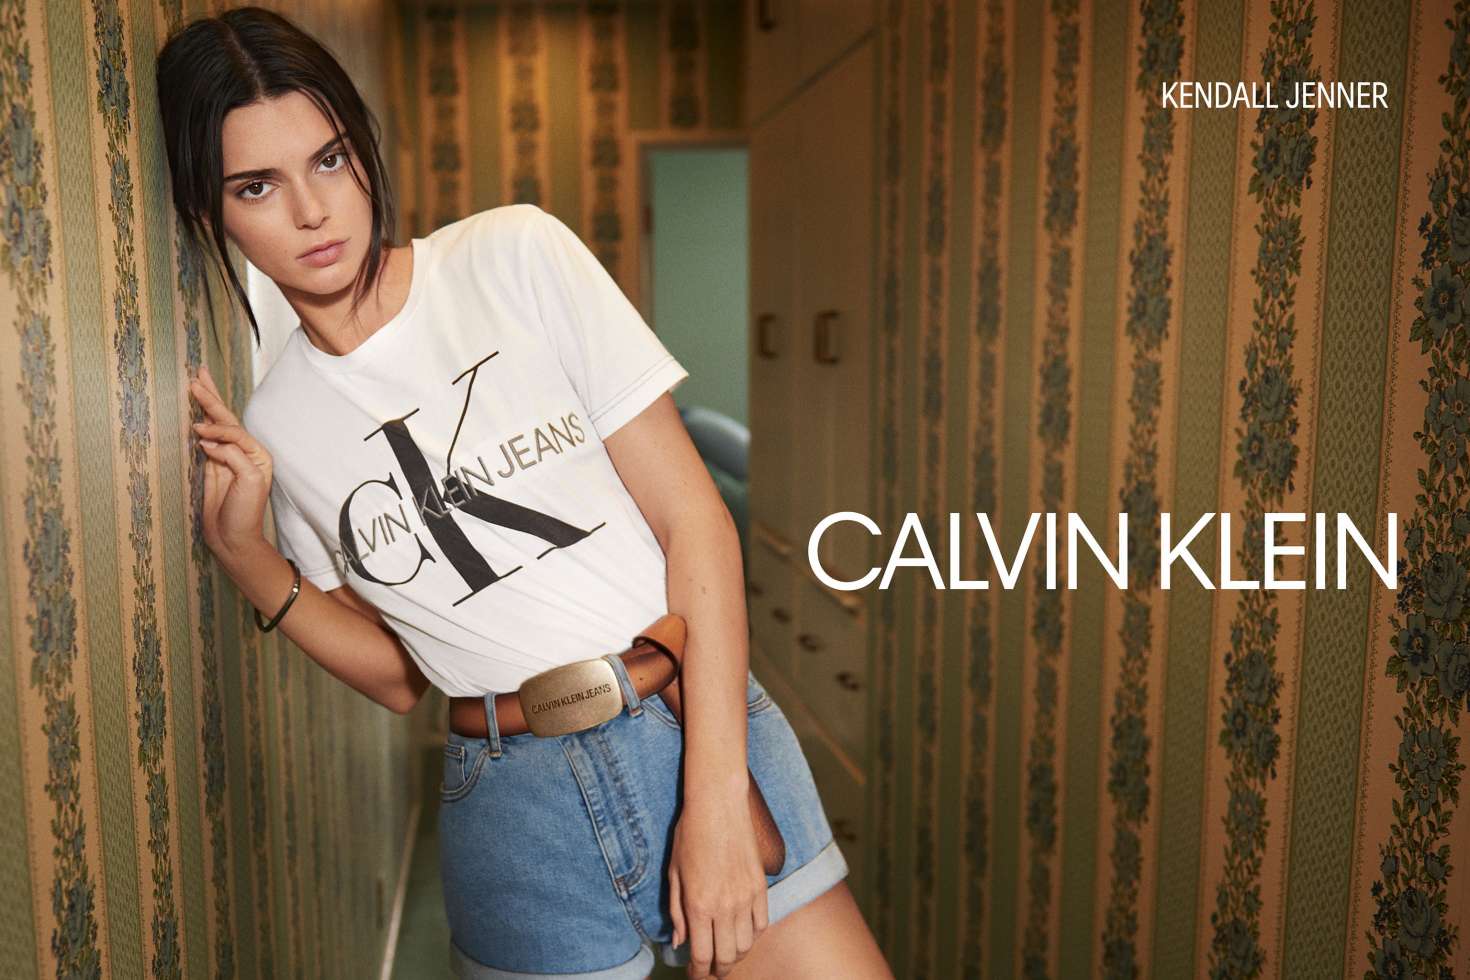 Kendall Jenner â€“ Calvin Klein Jeans & Underwear 2019 Campaign